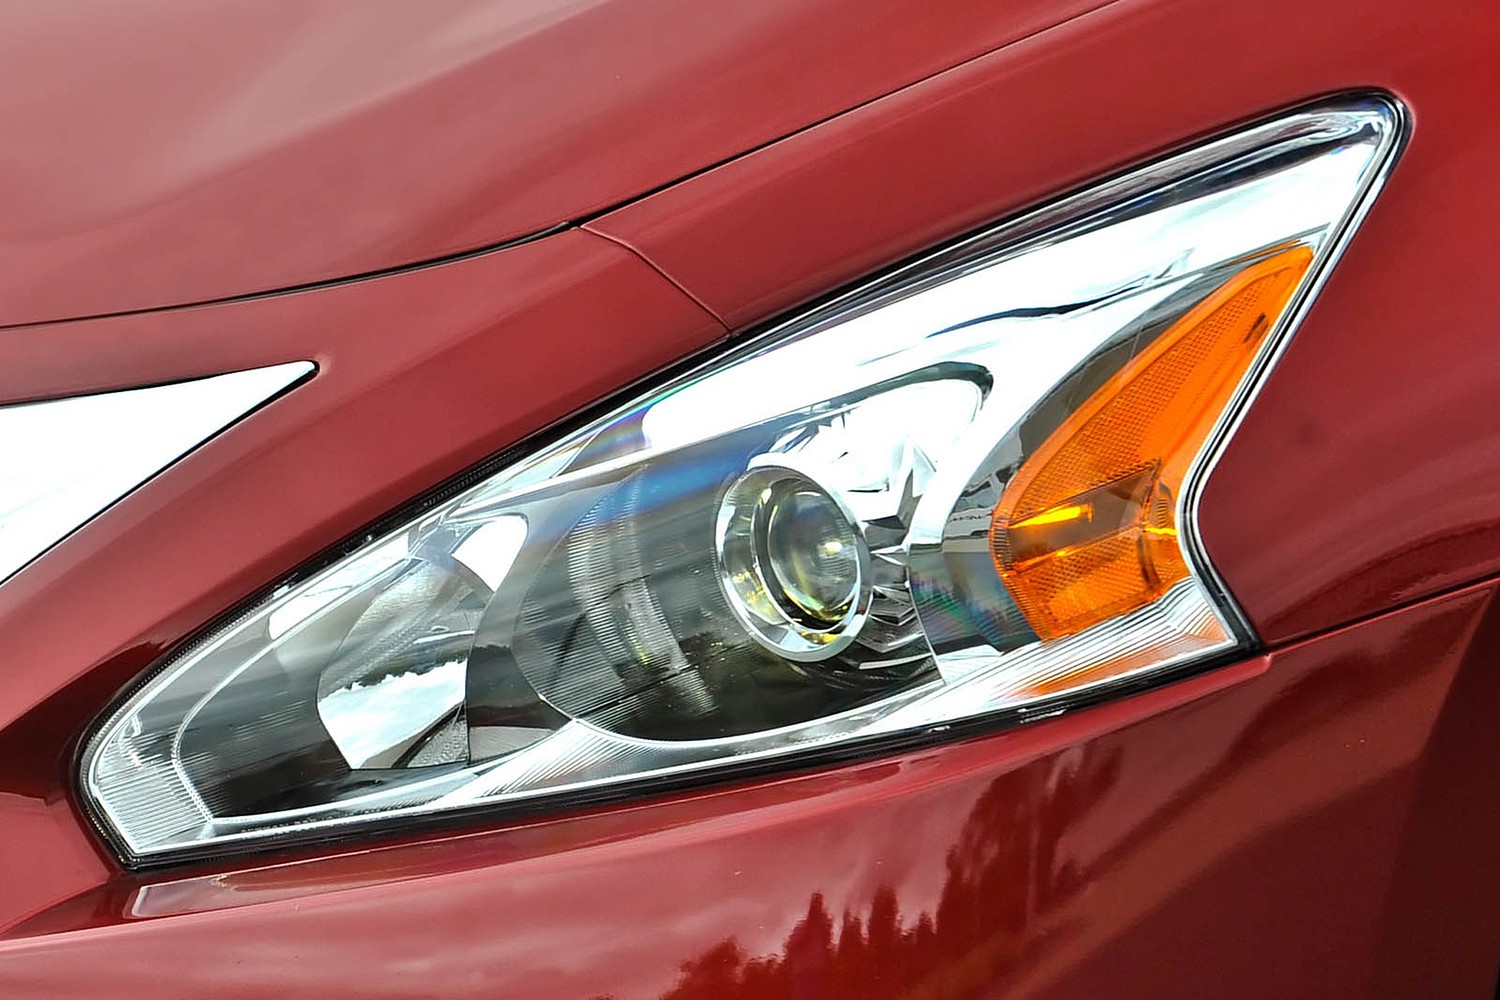 Nissan Altima 3.5 SL Sedan Headlamp Detail (2013 model year shown)